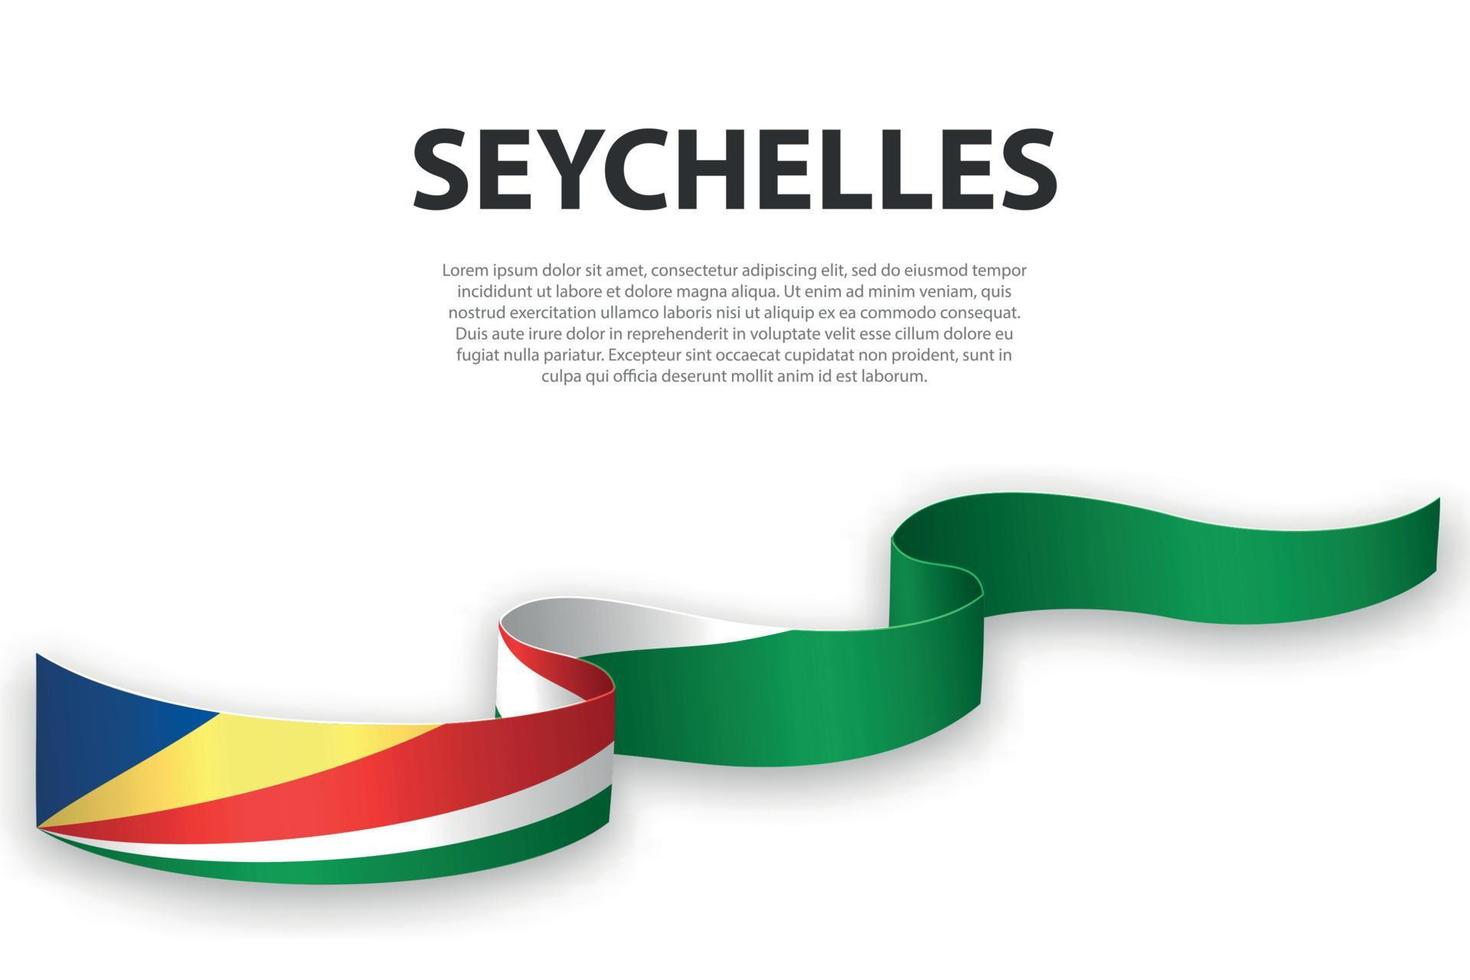 acenando a fita ou banner com bandeira das seychelles vetor